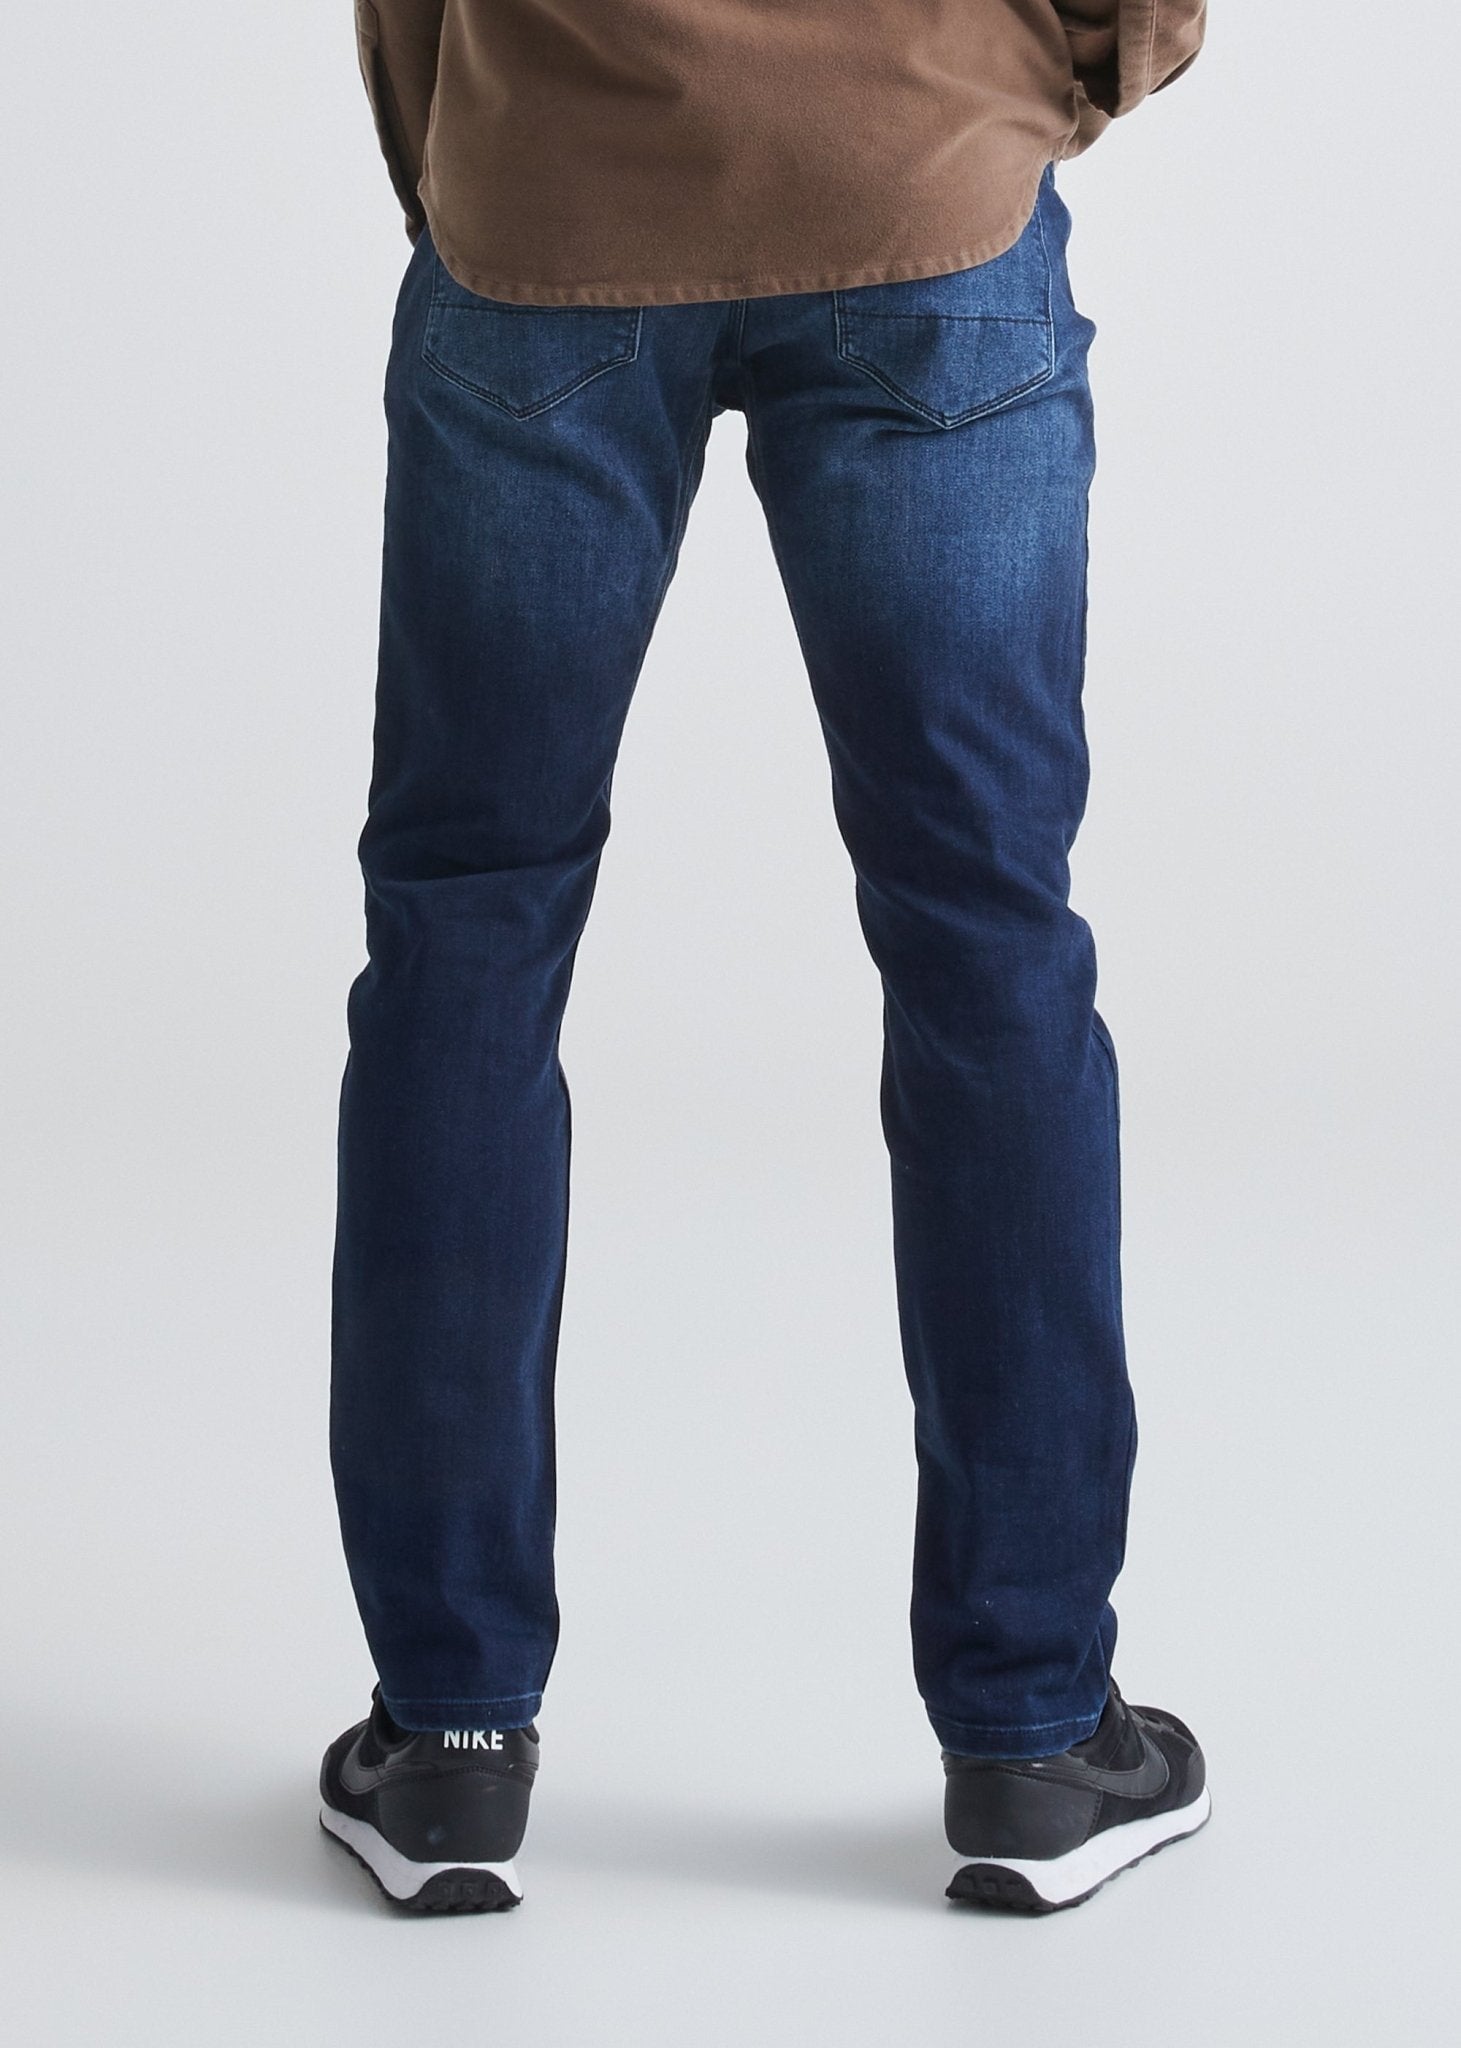 Men\'s Slim Fit Stretch Water Jeans Resistant